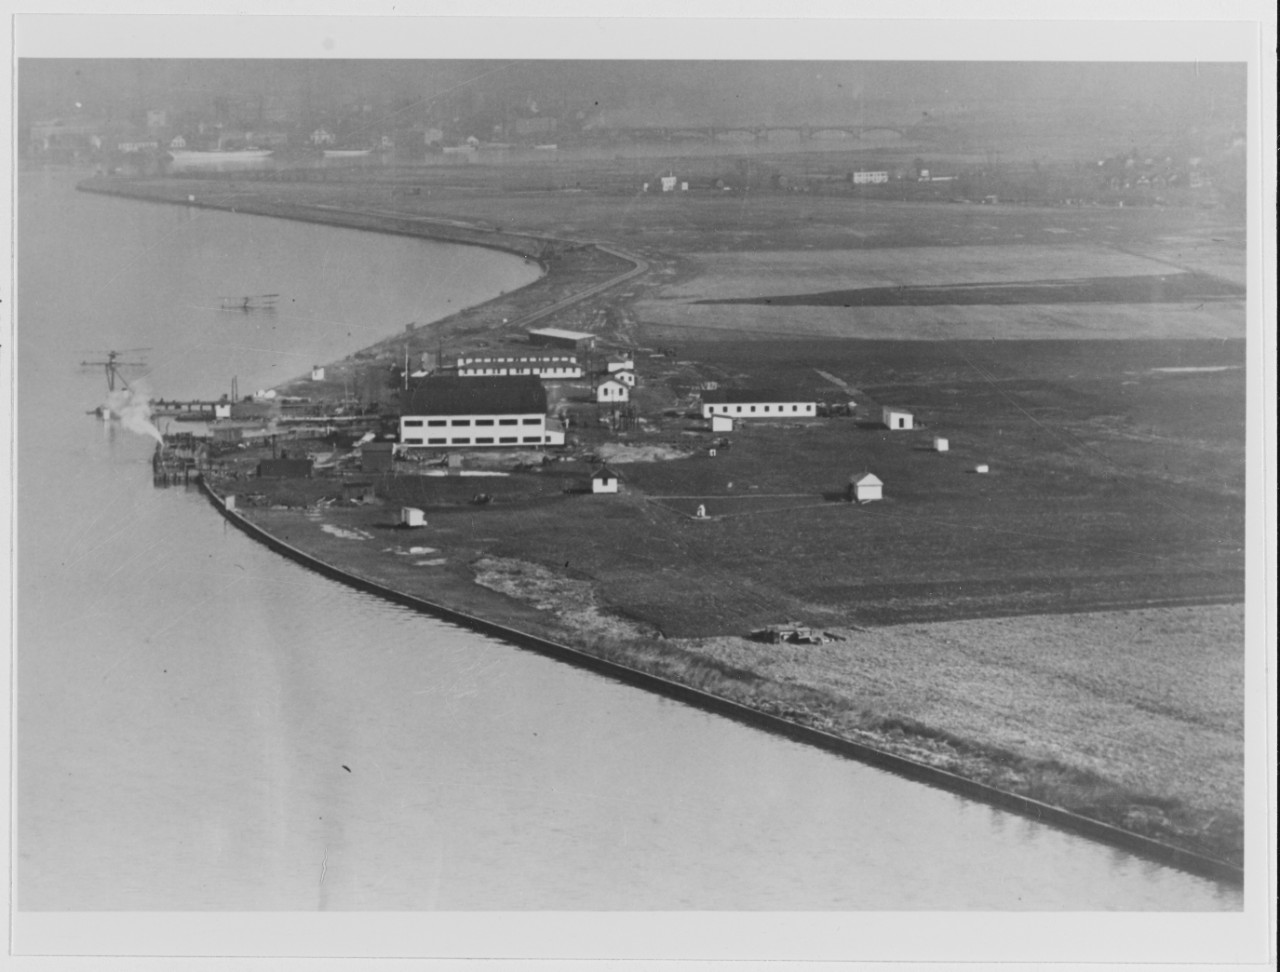 Naval Air Station, Anacostia, Washington, D.C. Photographed on December 12, 1918